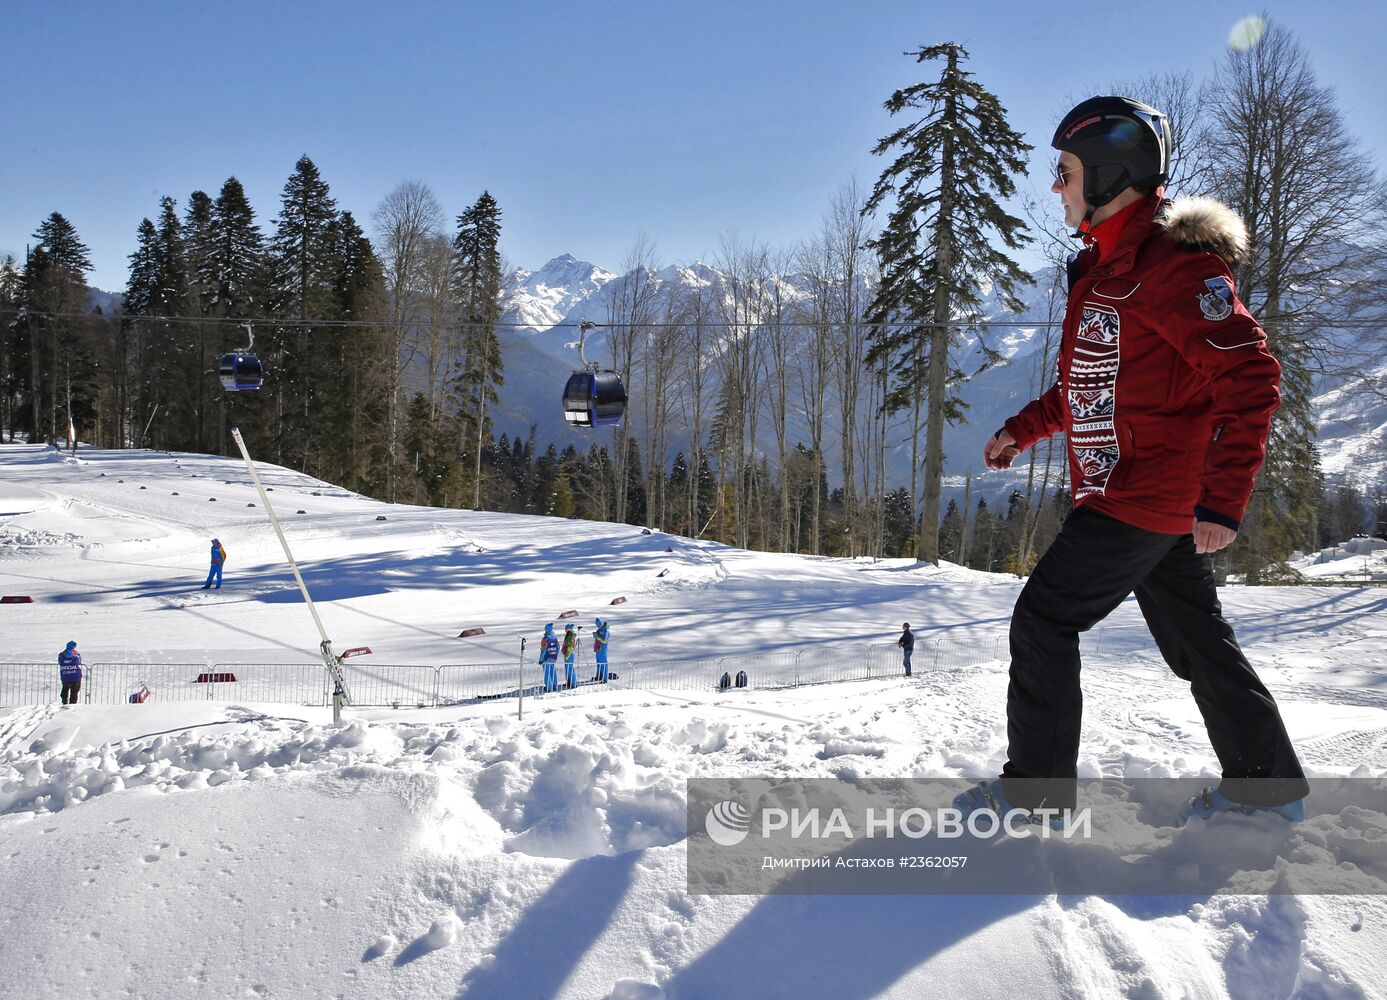 Д.Медведев на ХХII зимних Олимпийских играх в Сочи